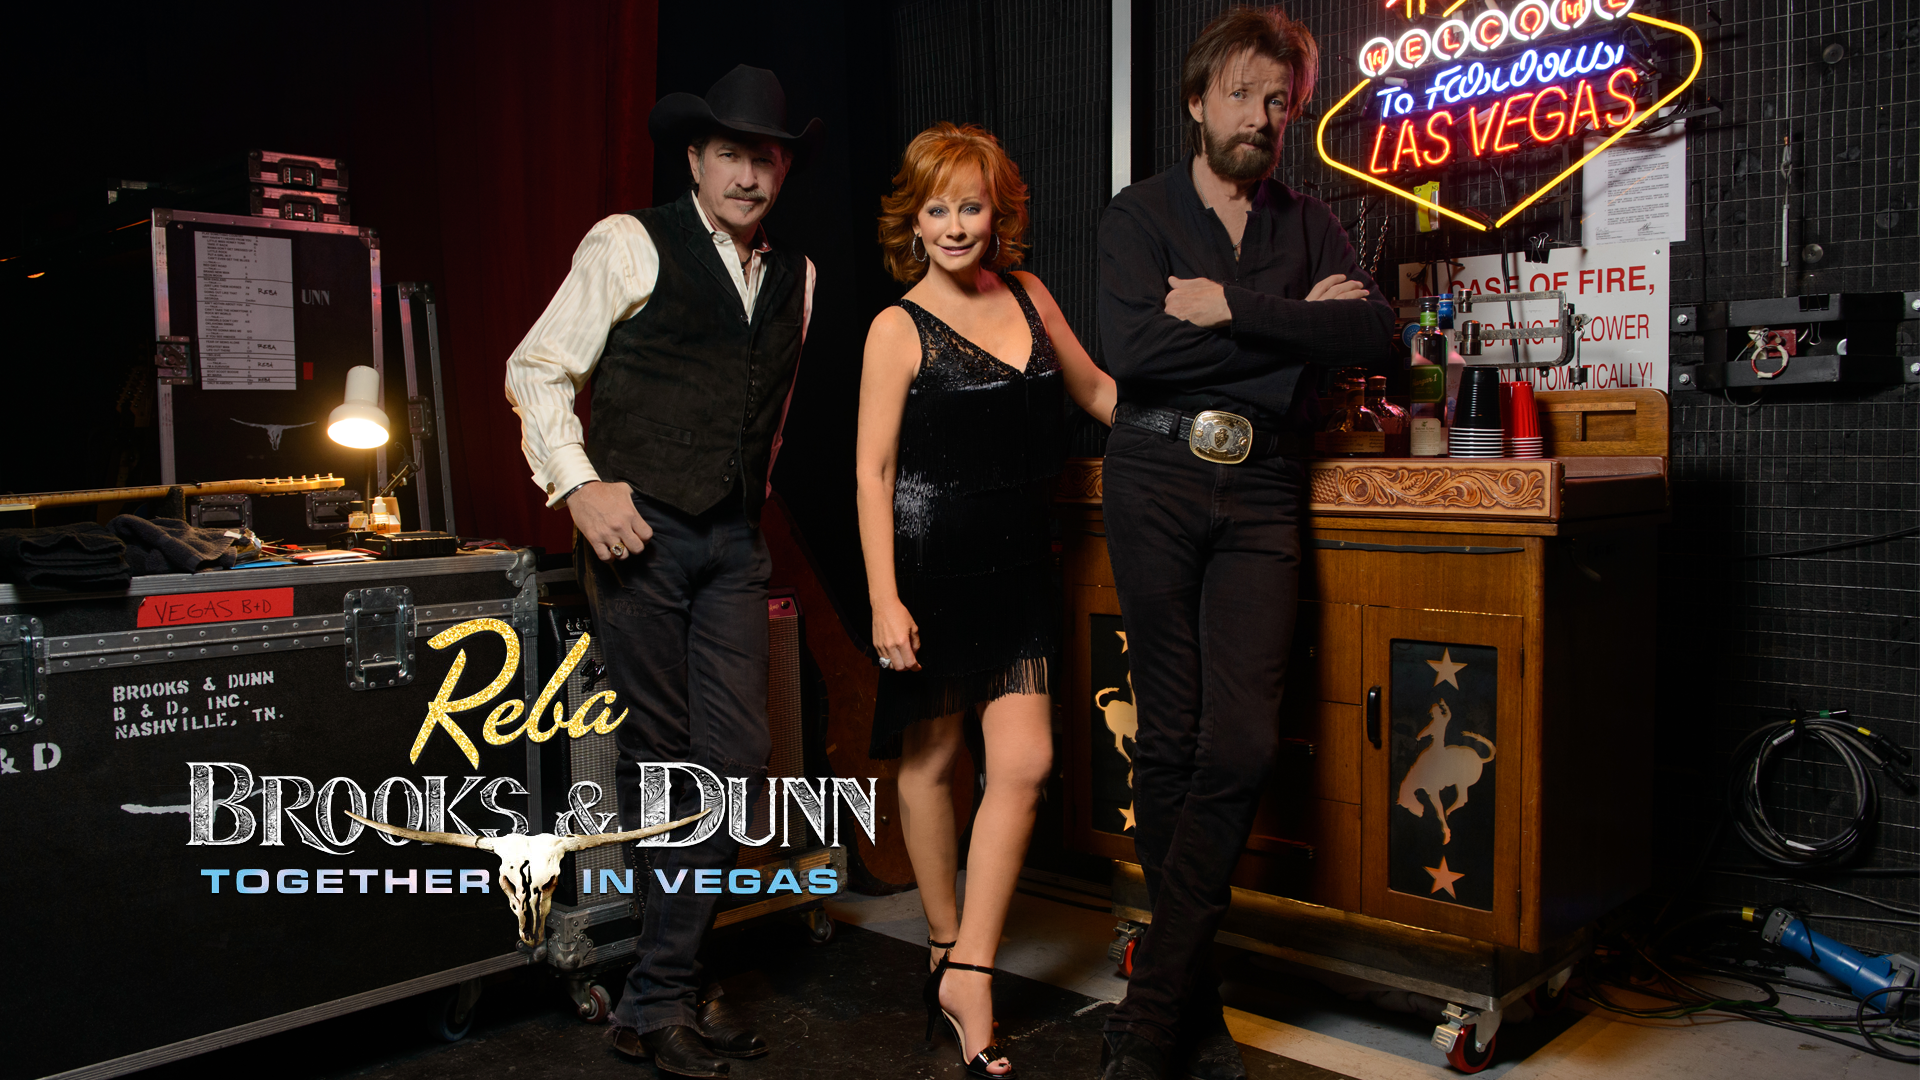 Reba, Brooks & Dunn Together in Las Vegas wallpaper. Brooks & dunn, Country music, Reba mcentire